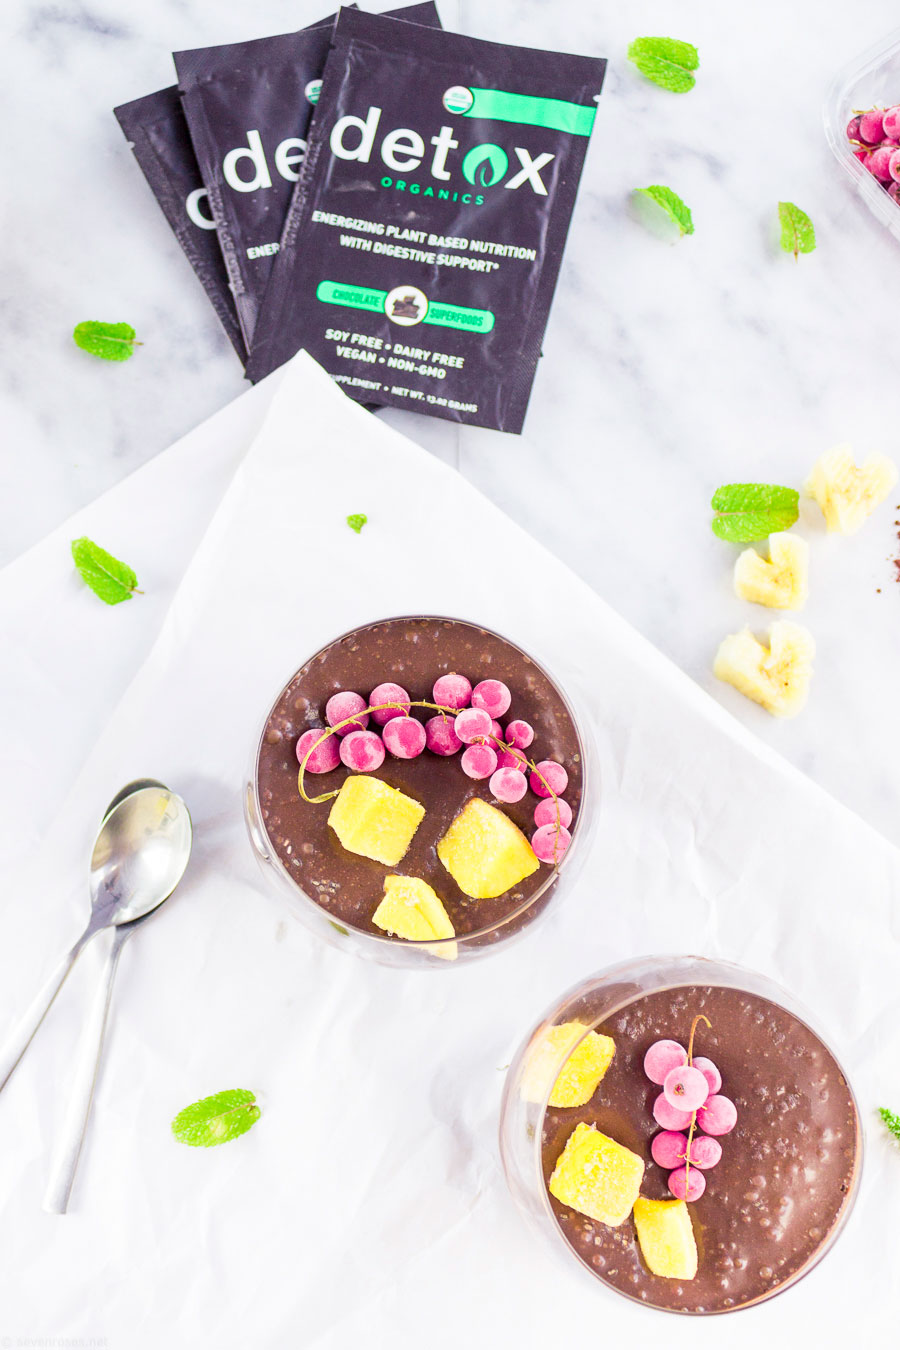 Chocolate-chia pudding featuring Detox Organics